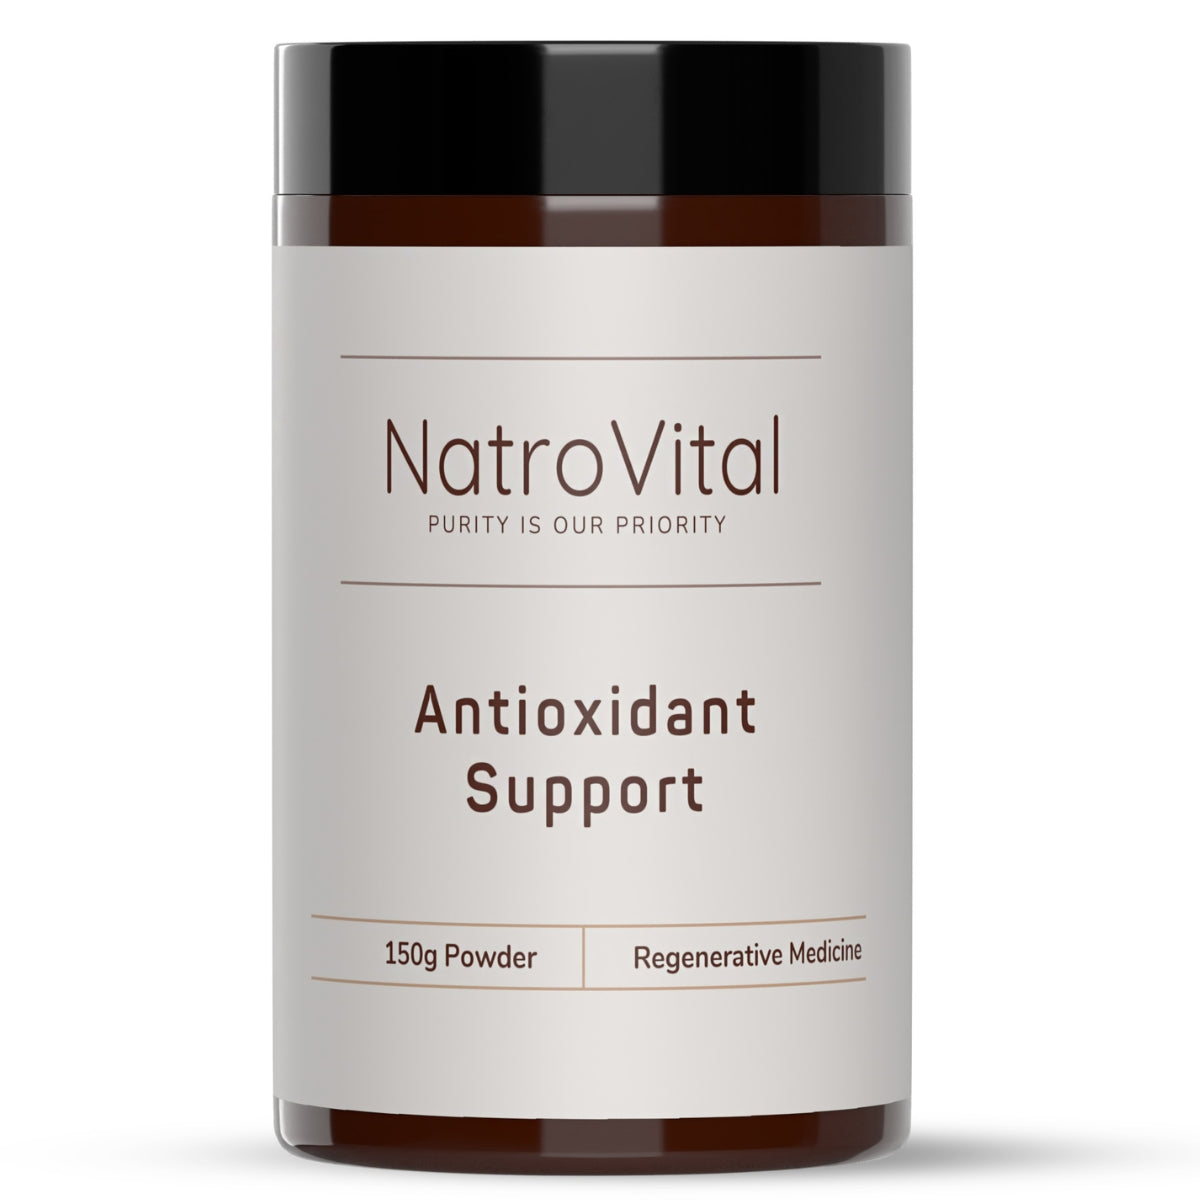 NatroVital Antioxidant Support | NatroVital